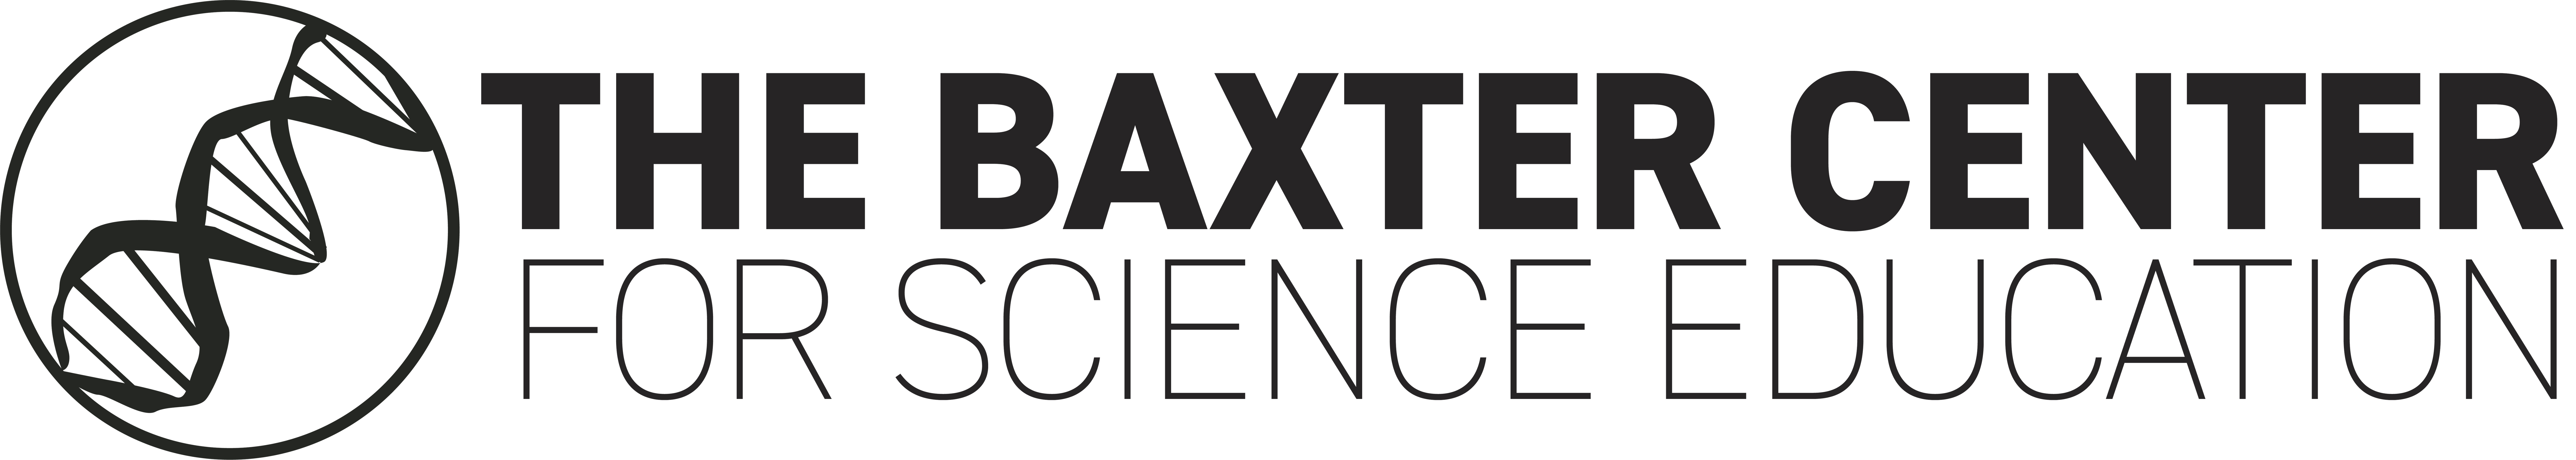 Baxter Center for Science Education (BCSE) logo